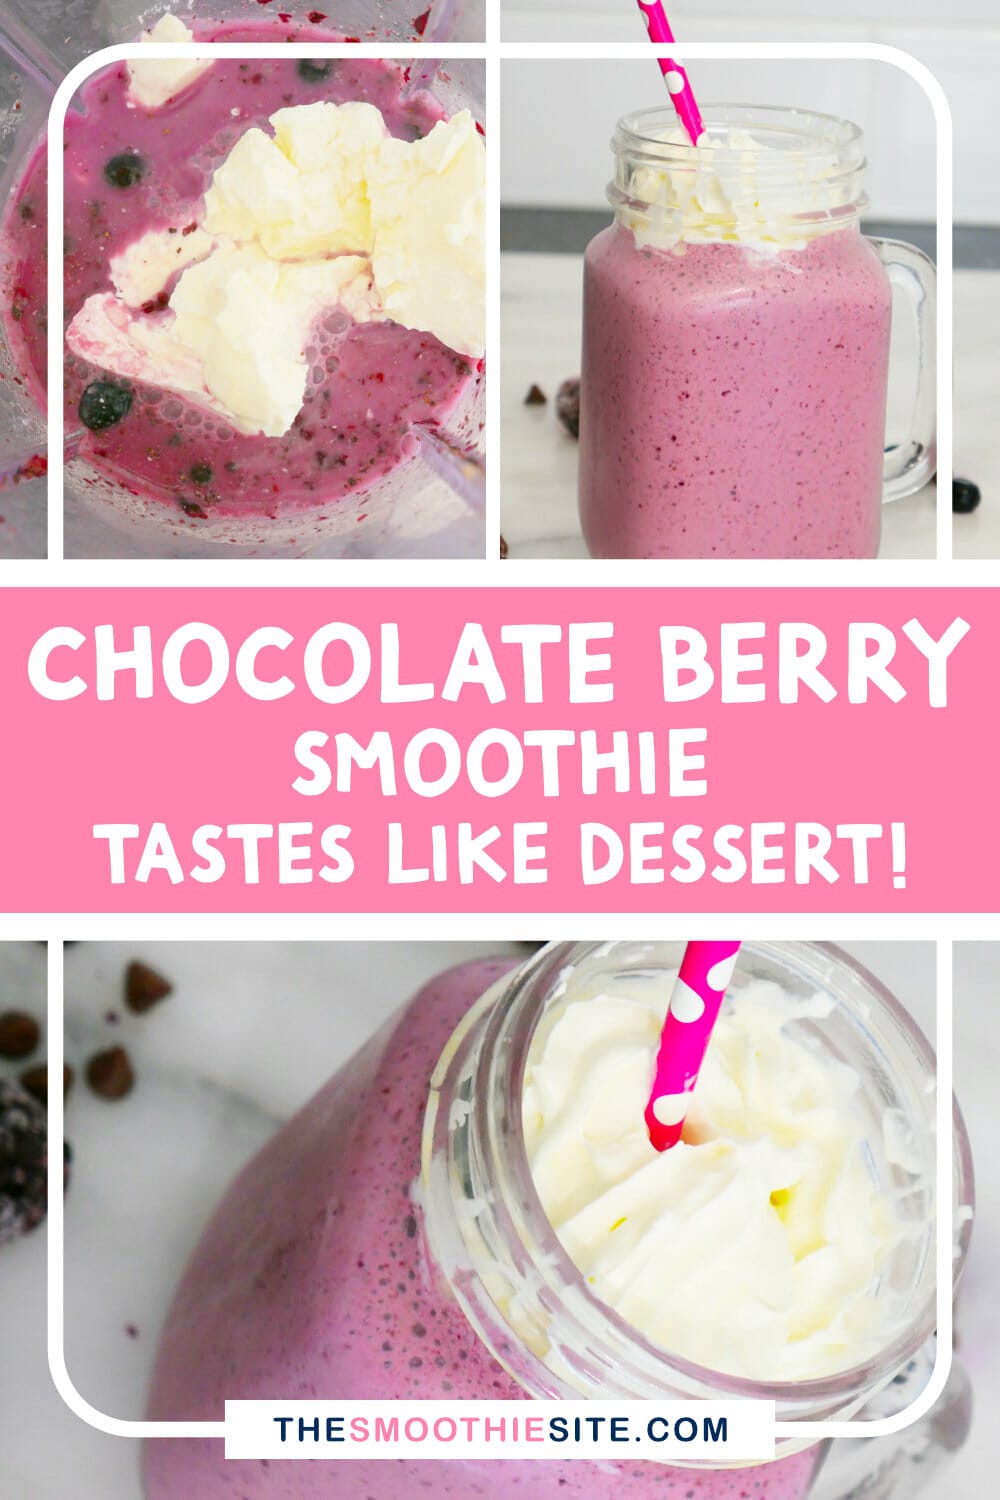 Chocolate berry smoothie that tastes like dessert! (+ secret ingredients!) via @thesmoothiesite